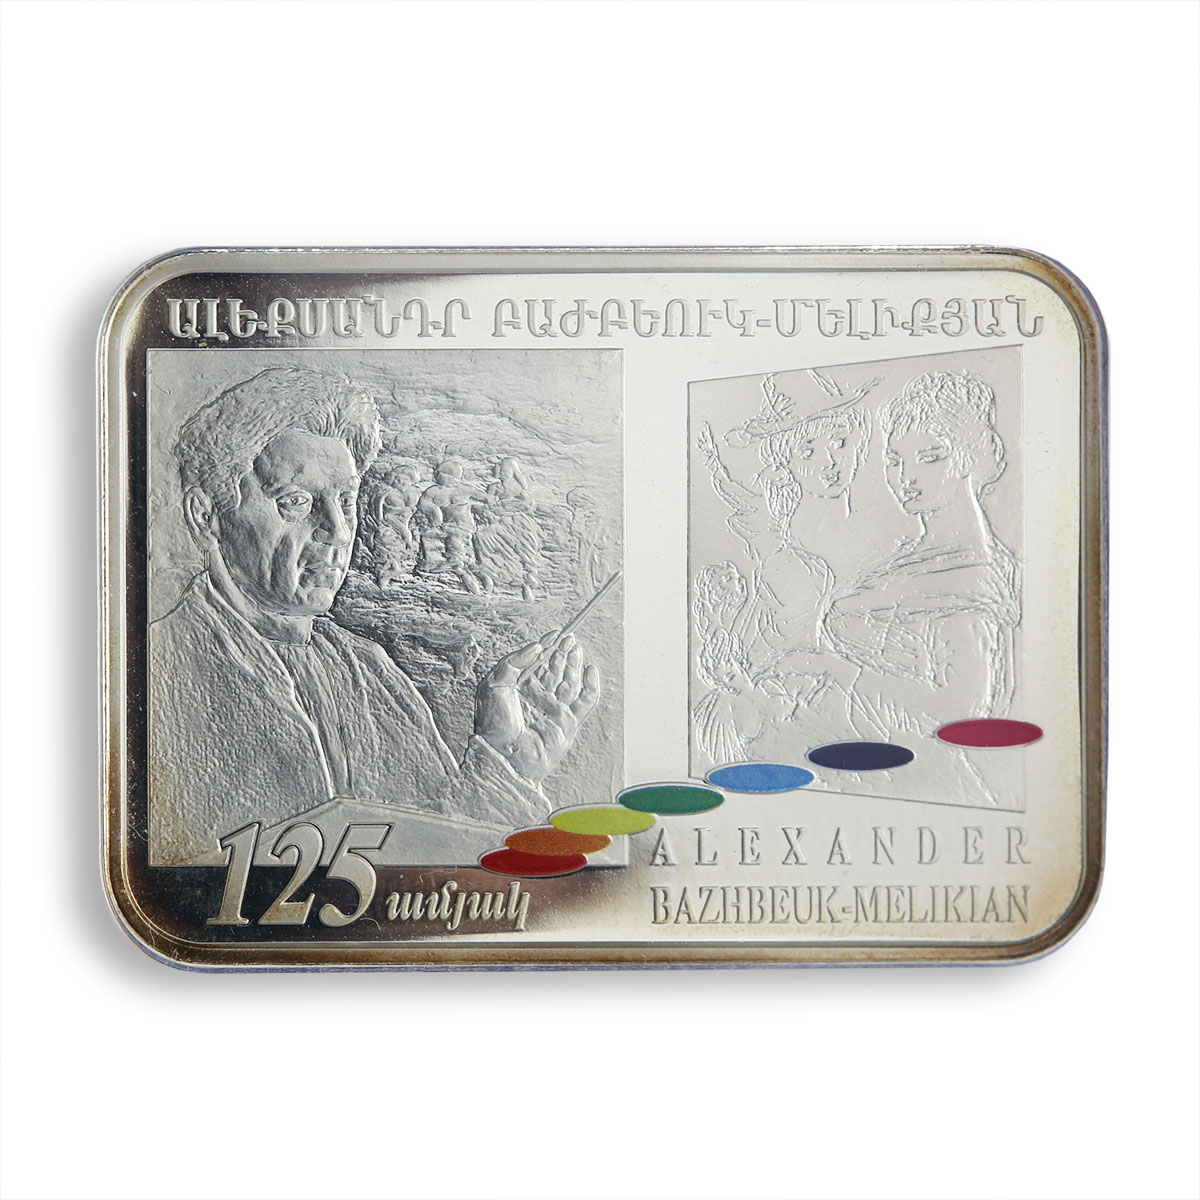 Armenia 100 dram 125th Anniversary A. Bazhbeuk-Melikian colored silver coin 2016